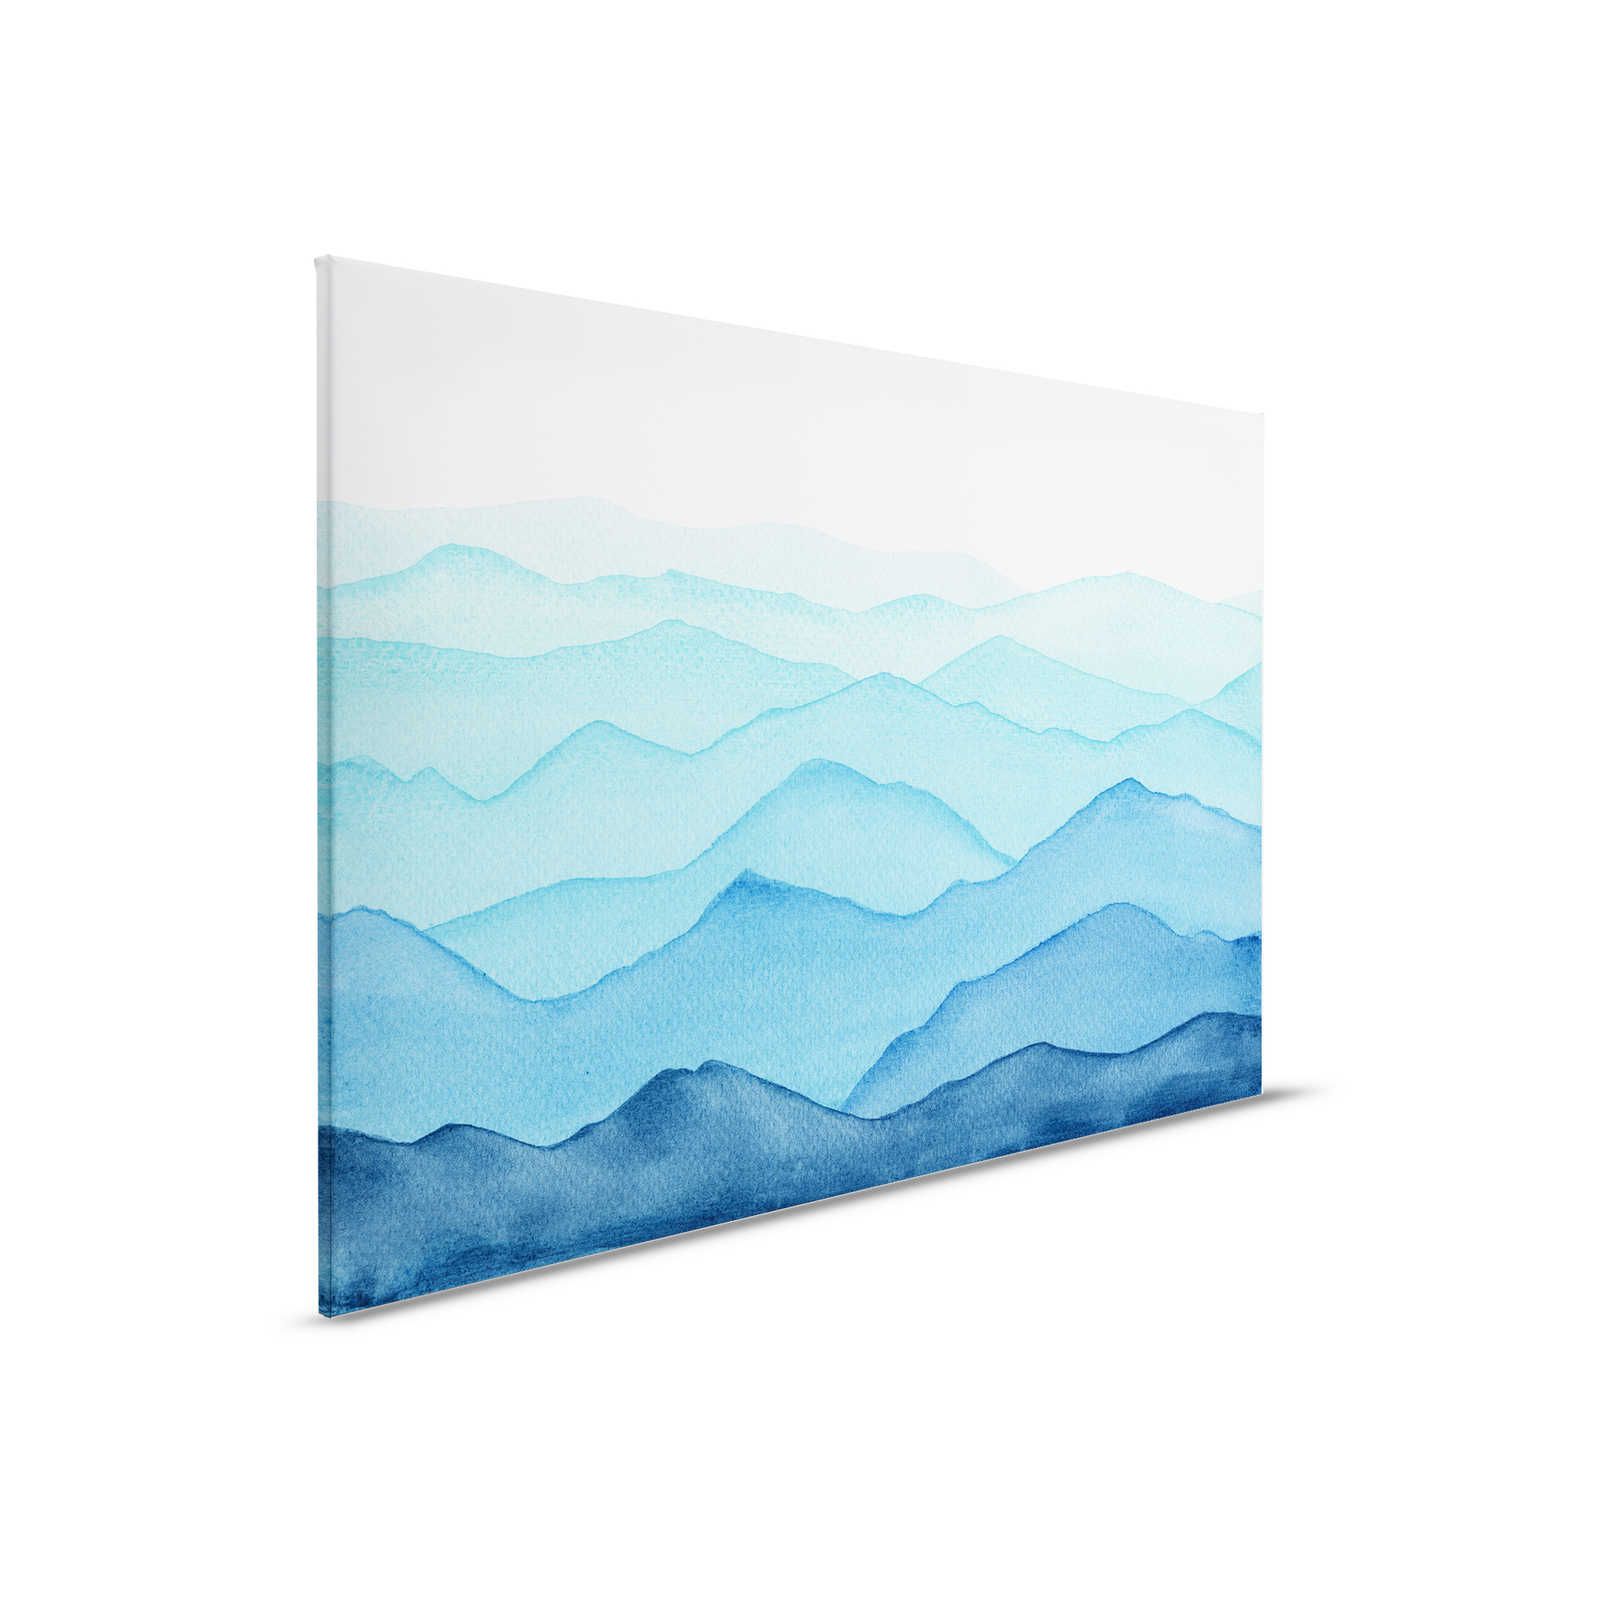 Lienzo Mar con olas en acuarela - 90 cm x 60 cm
